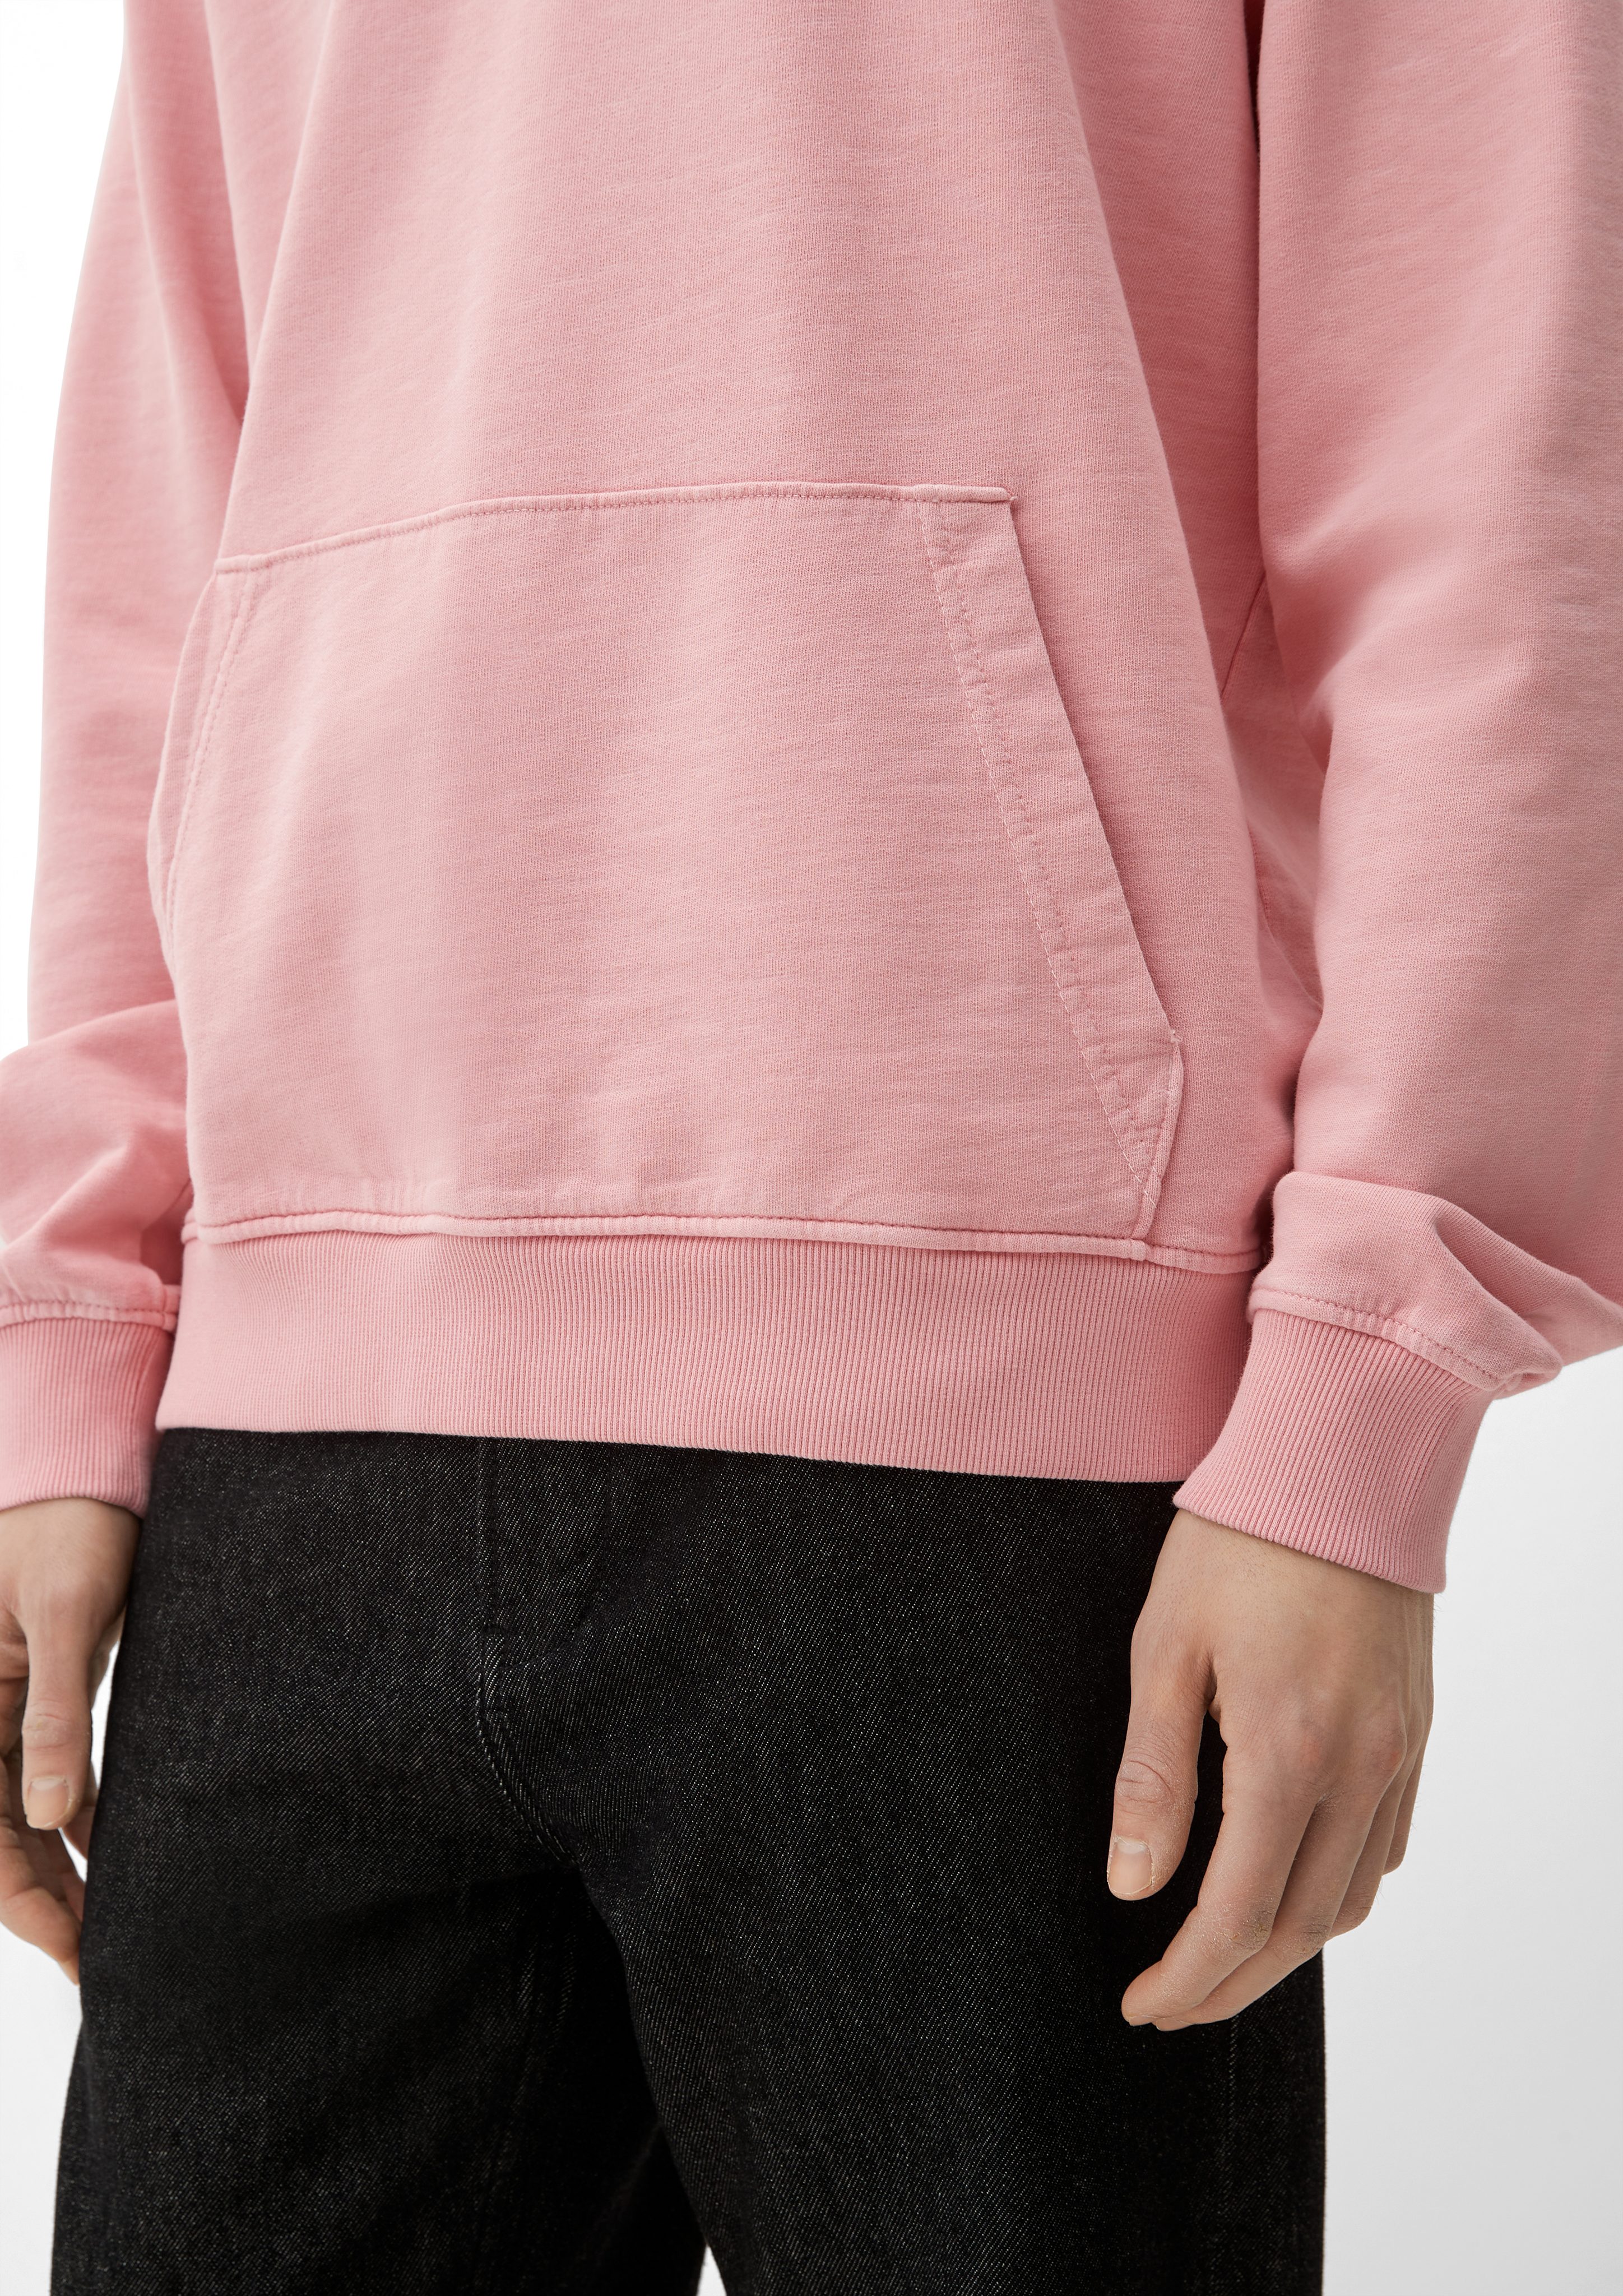 s.Oliver Sweatshirt Kapuzenpullover im Garment Dye, Label-Patch rosa Dye Applikation, Garment